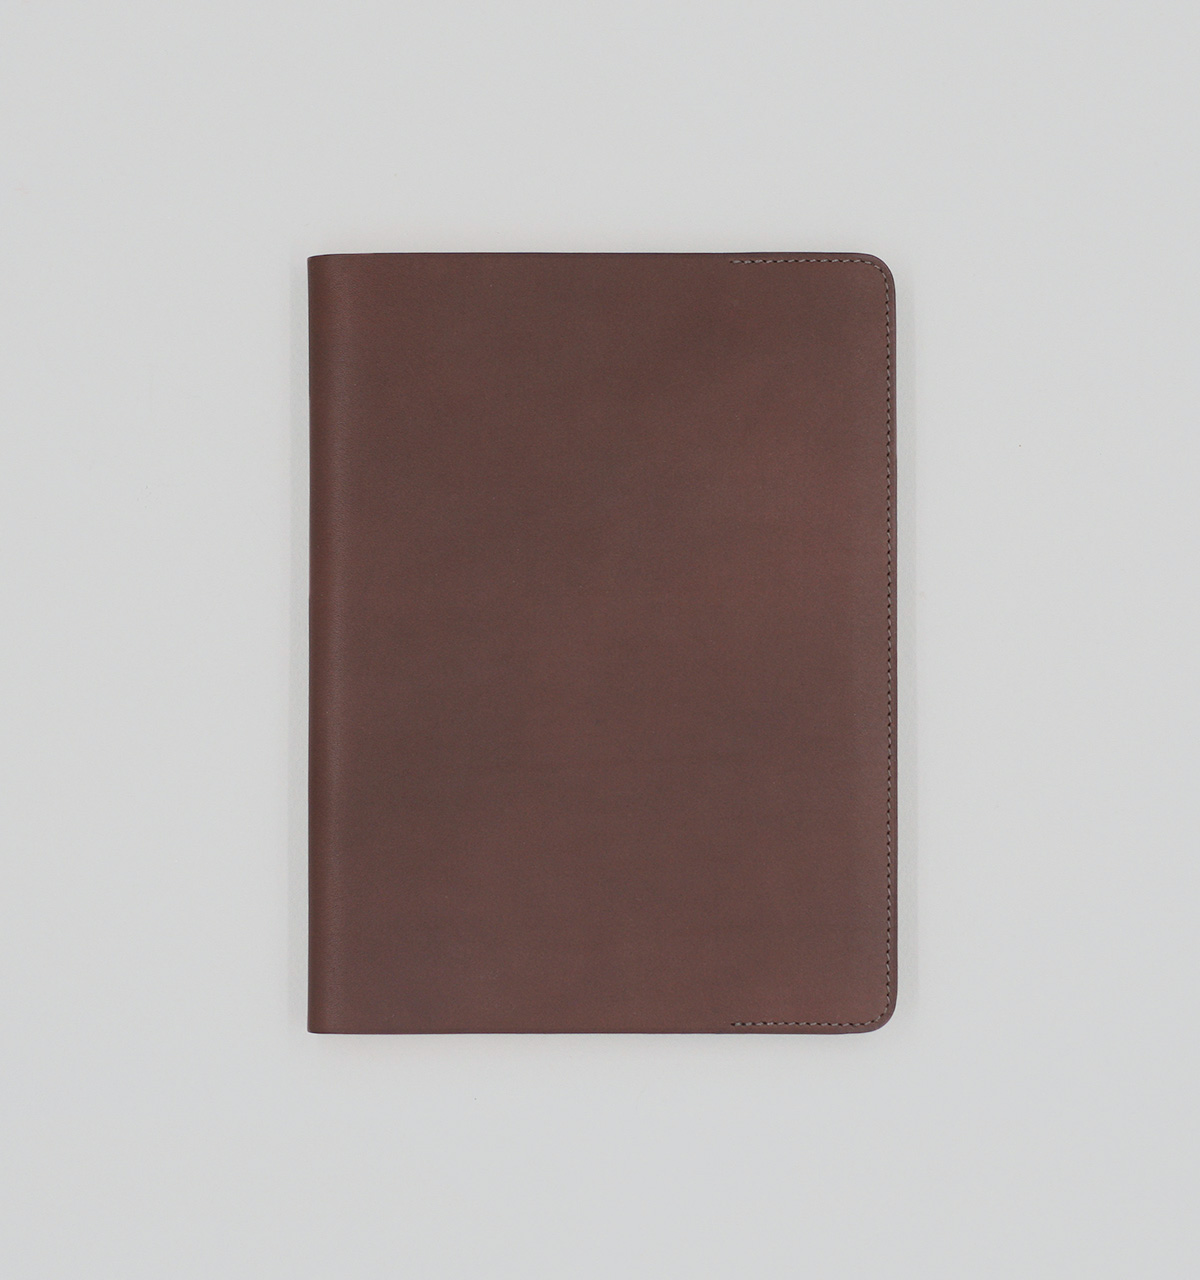 Protège cahier en cuir marron 23 x 31,5 cm - Marquage cheval